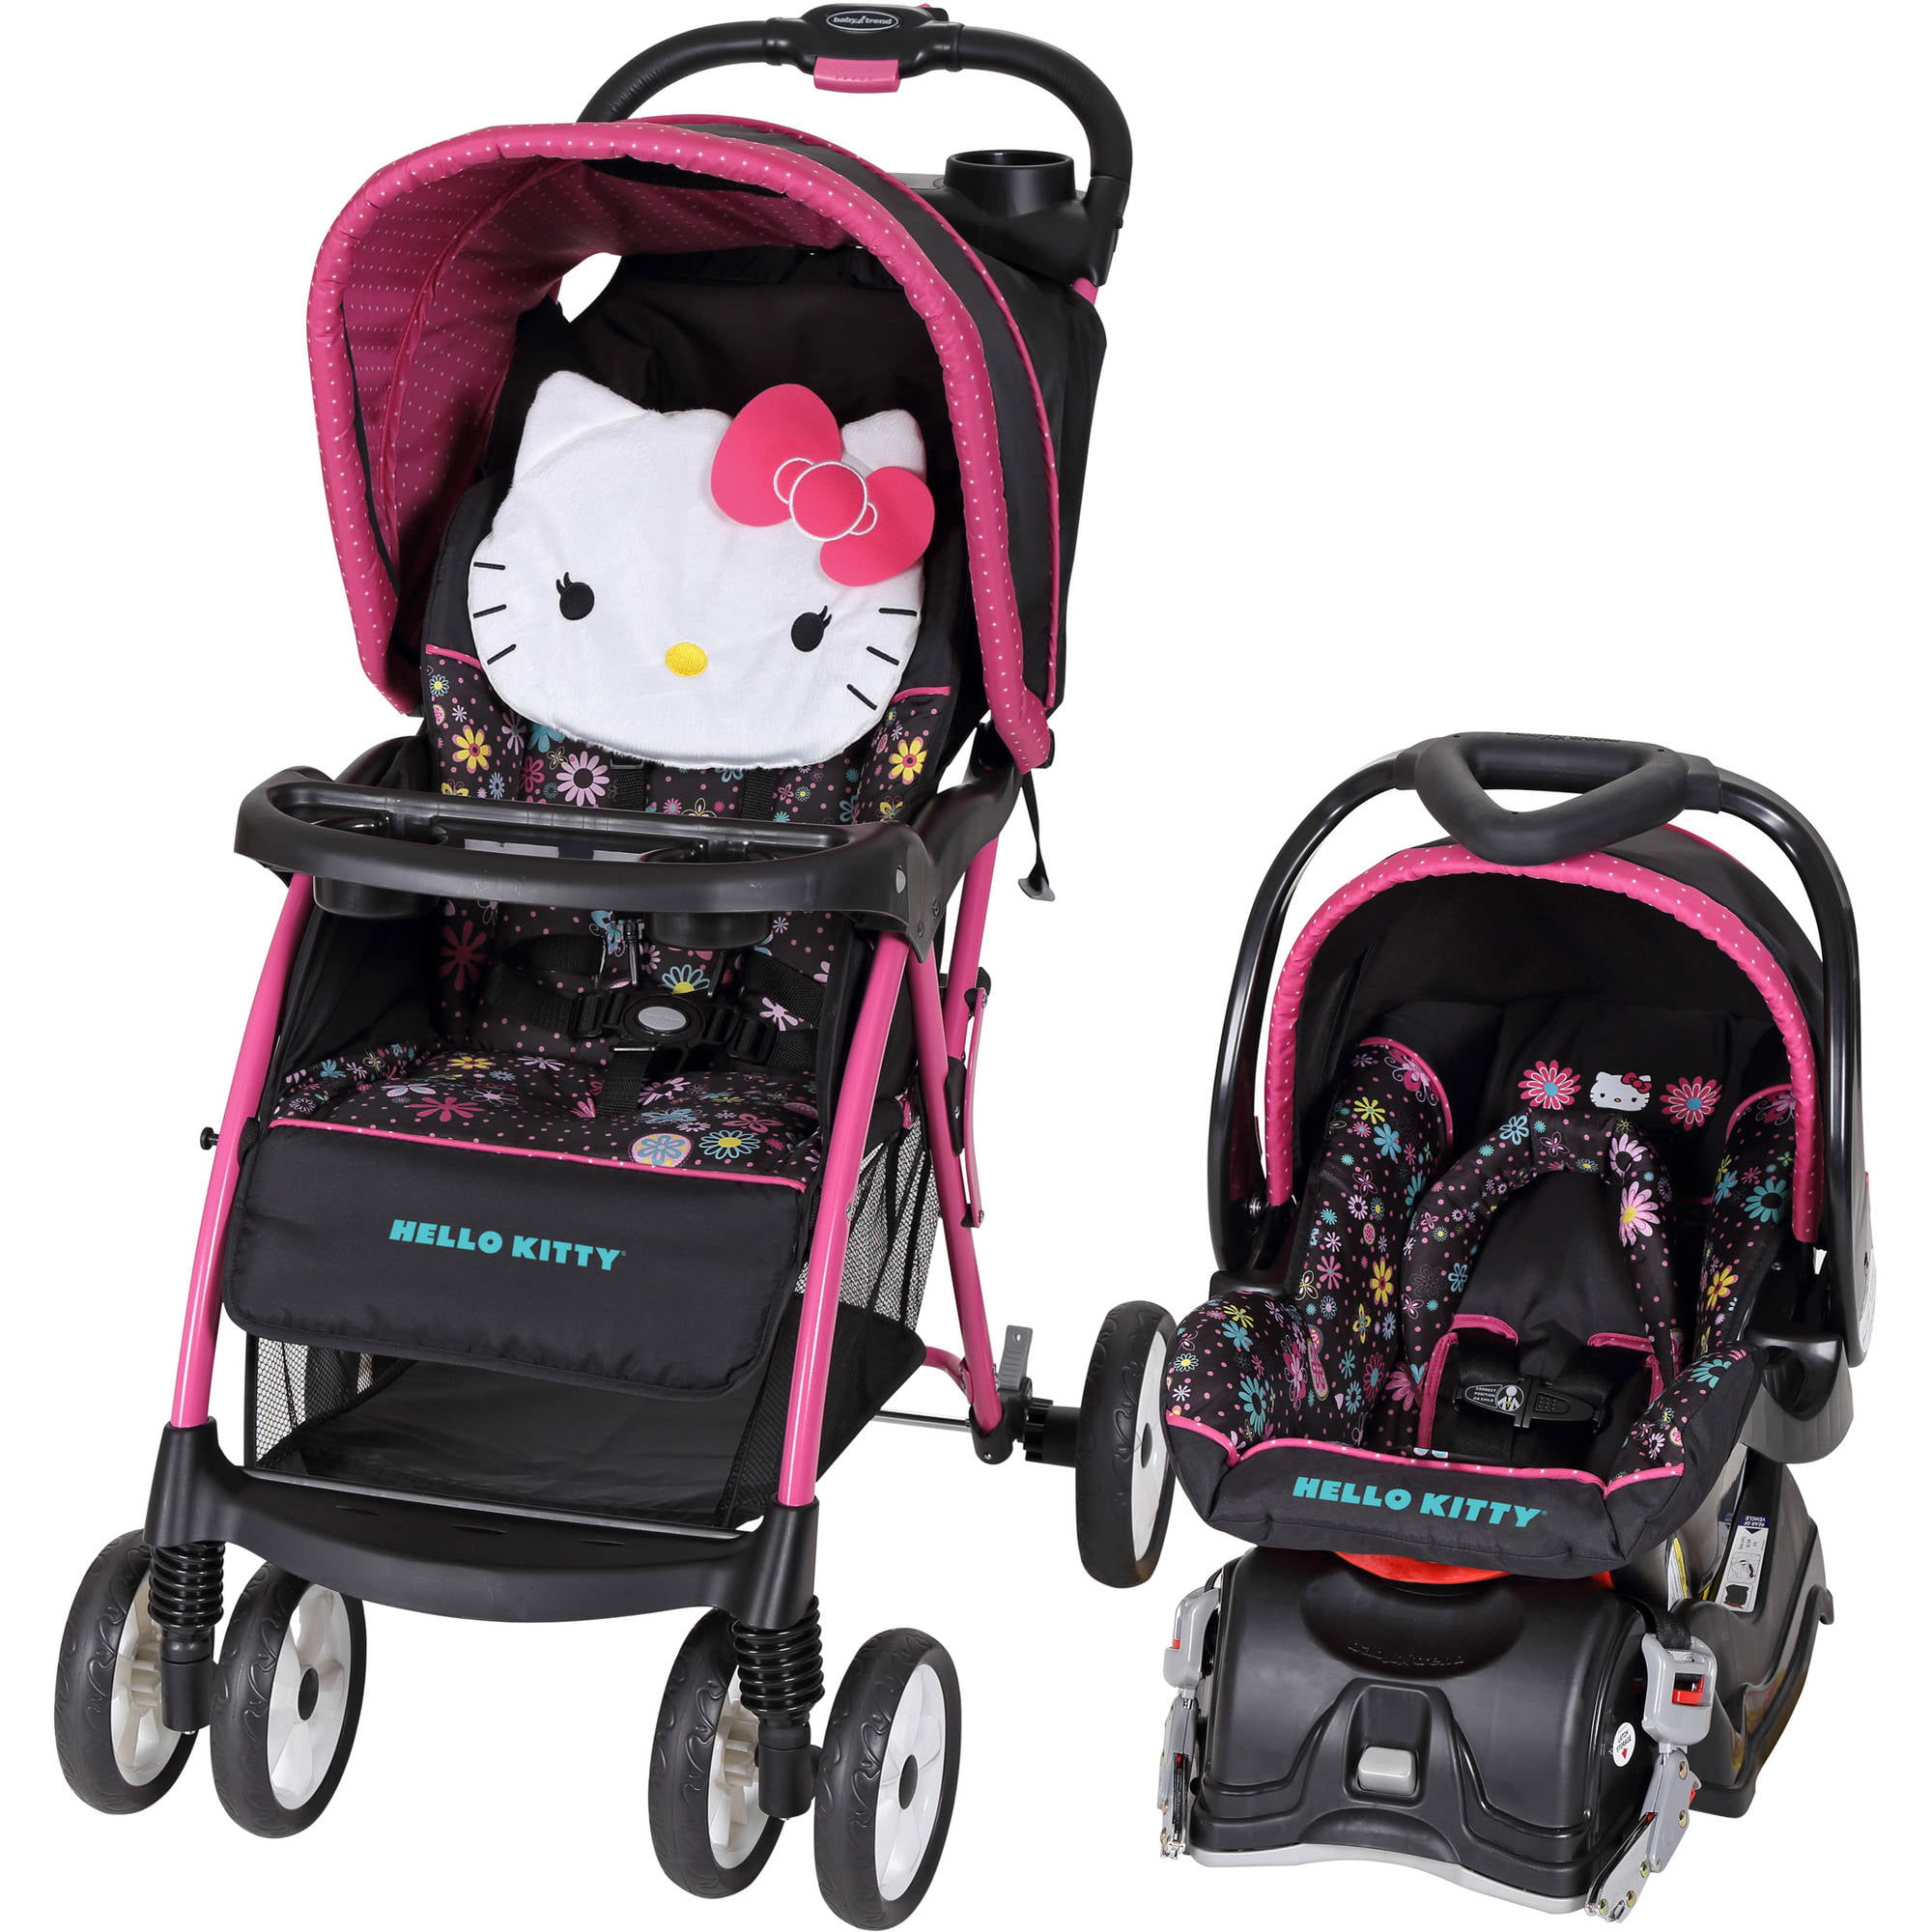 Baby Trend Hello Kitty Venture Travel System – Stroller + Flex-Loc Infant Car Seat